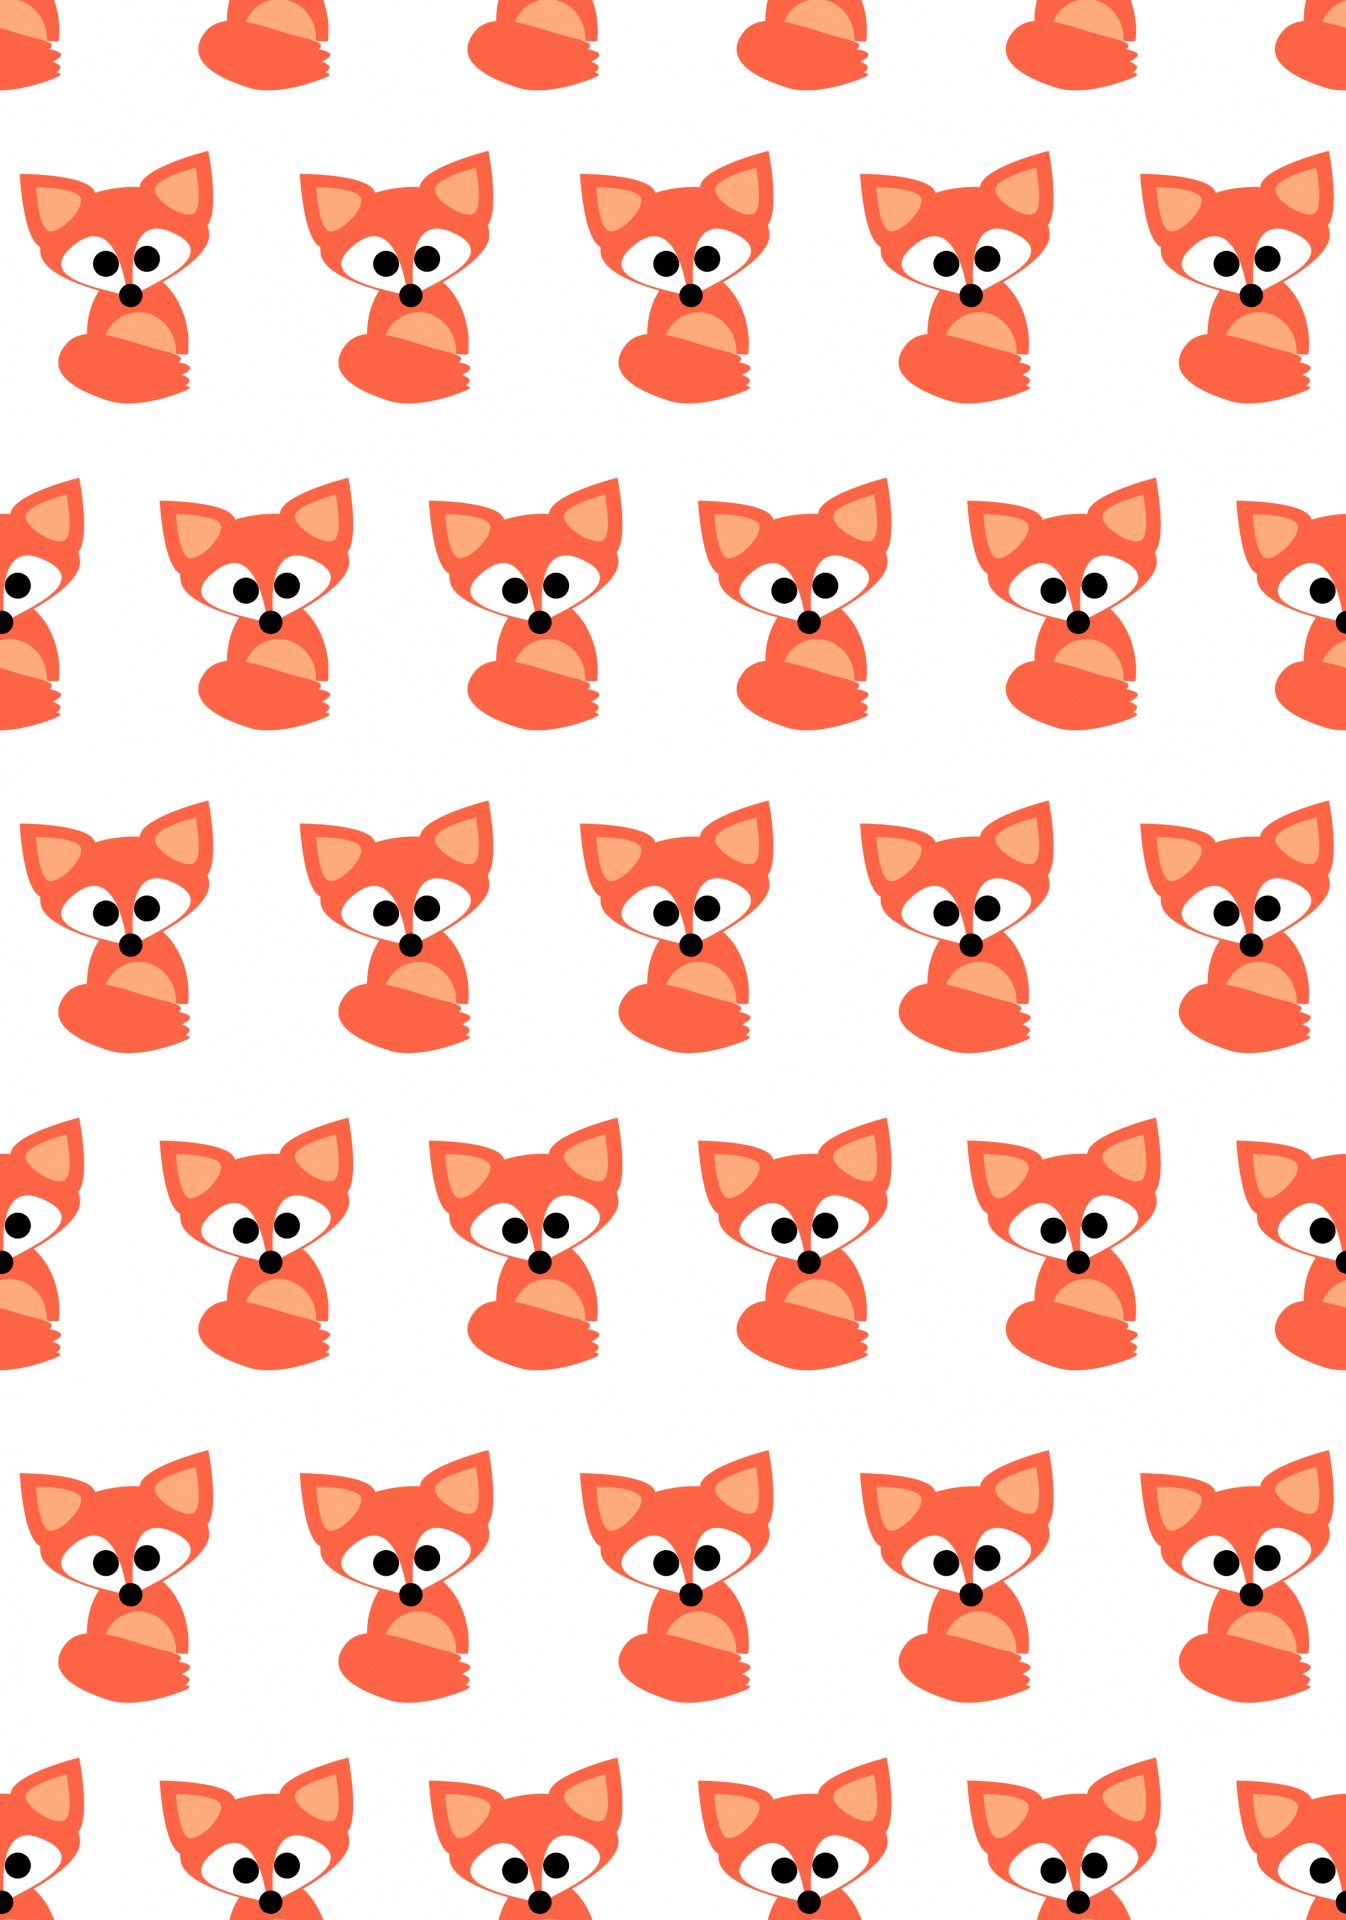 Cute whimsical fox pattern seamless wallpaper background design